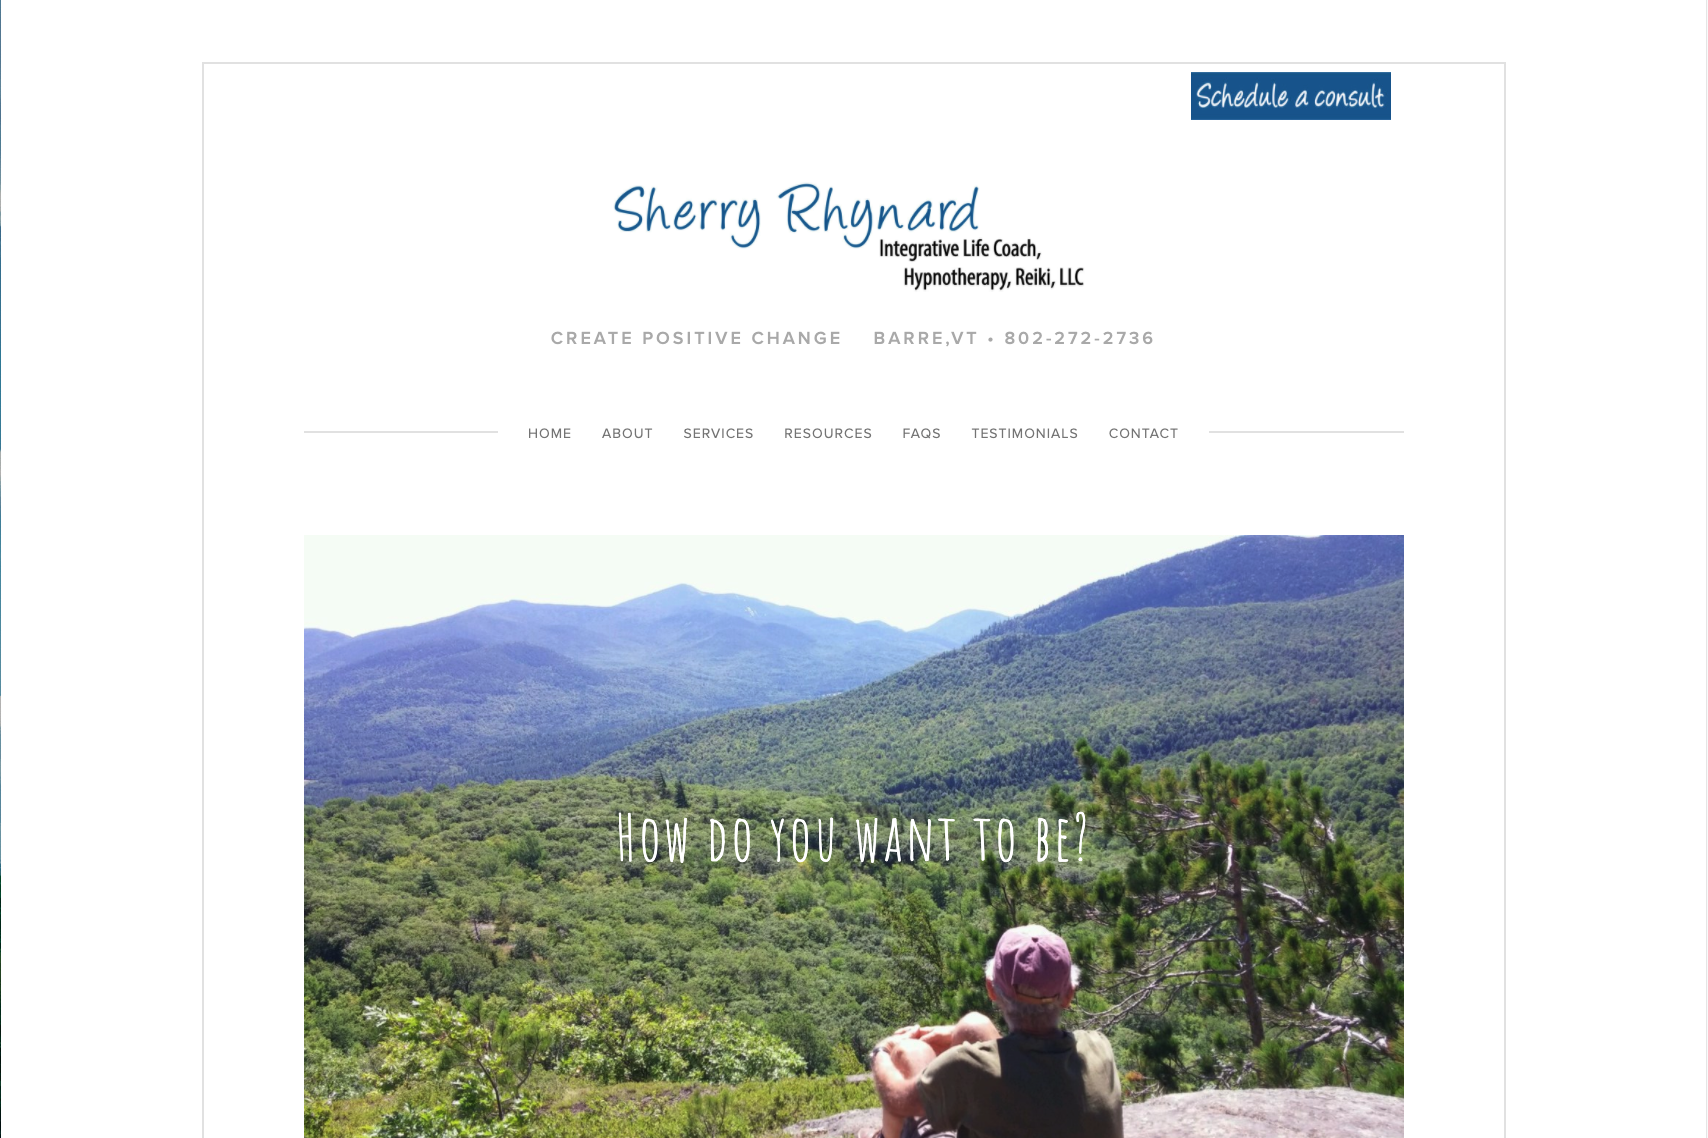 Website for Sherry Rhynard